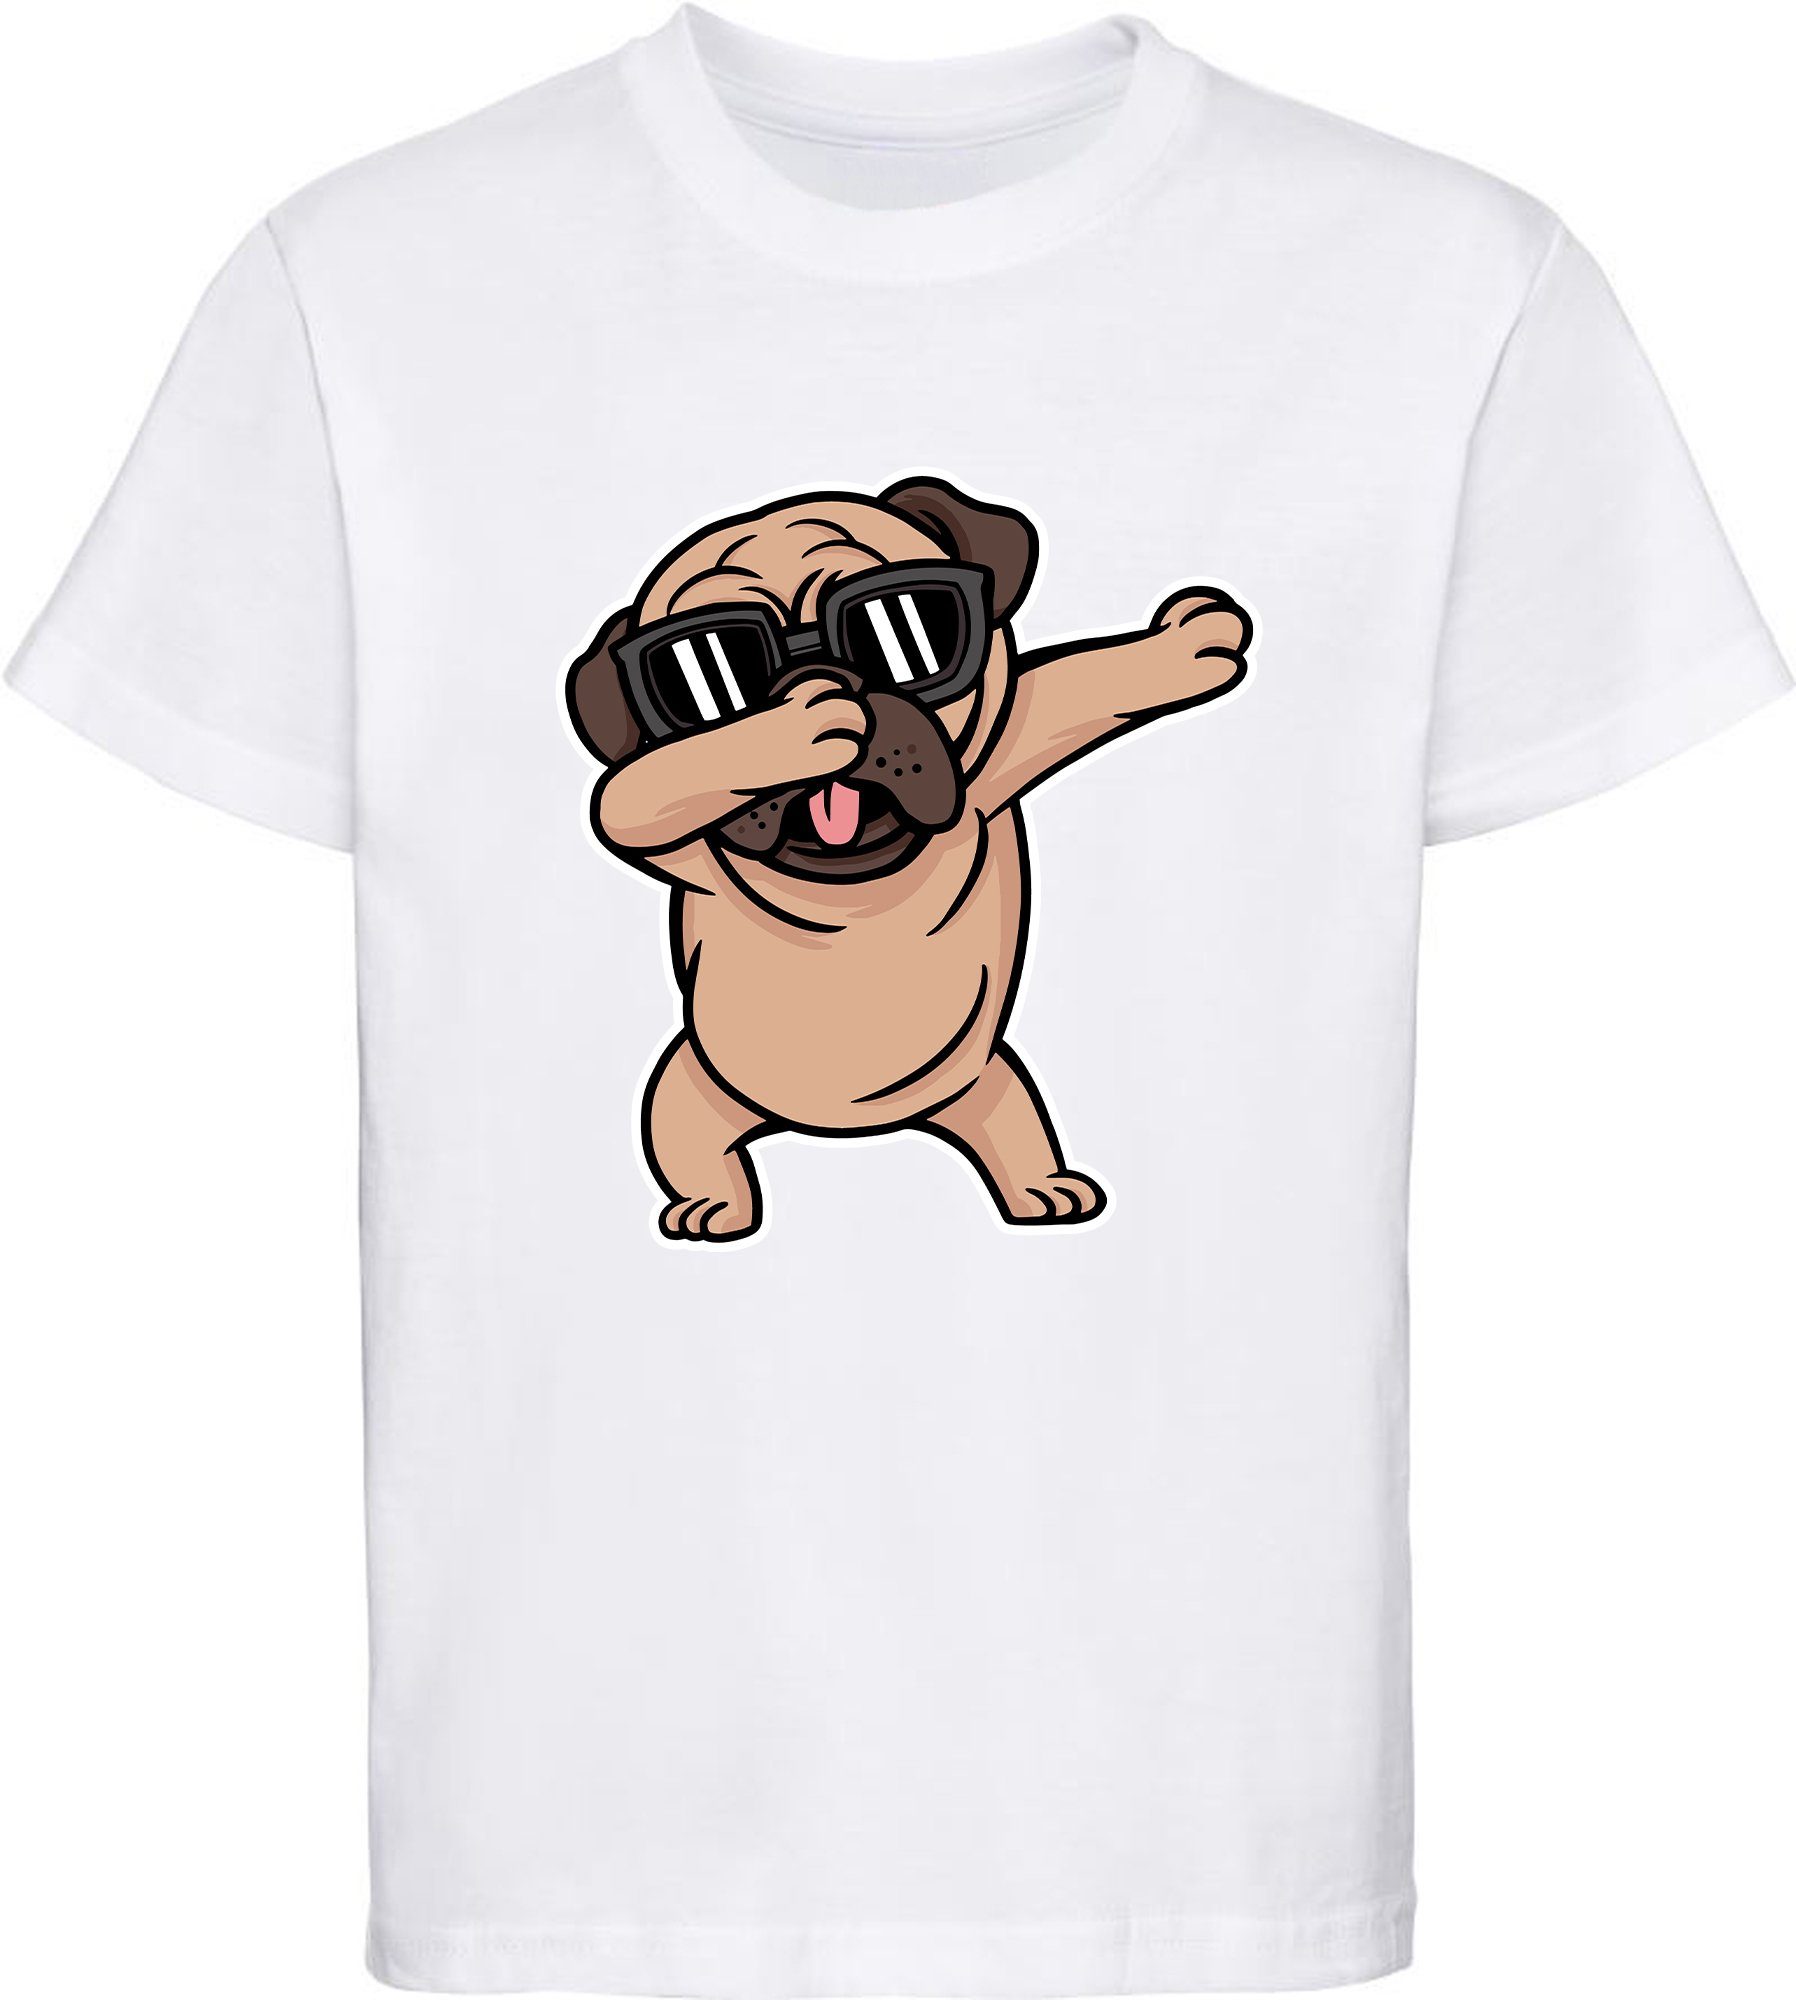 MyDesign24 Print-Shirt Kinder Hunde T-Shirt bedruckt - dab tanzender Hund Baumwollshirt mit Aufdruck, i238 weiss